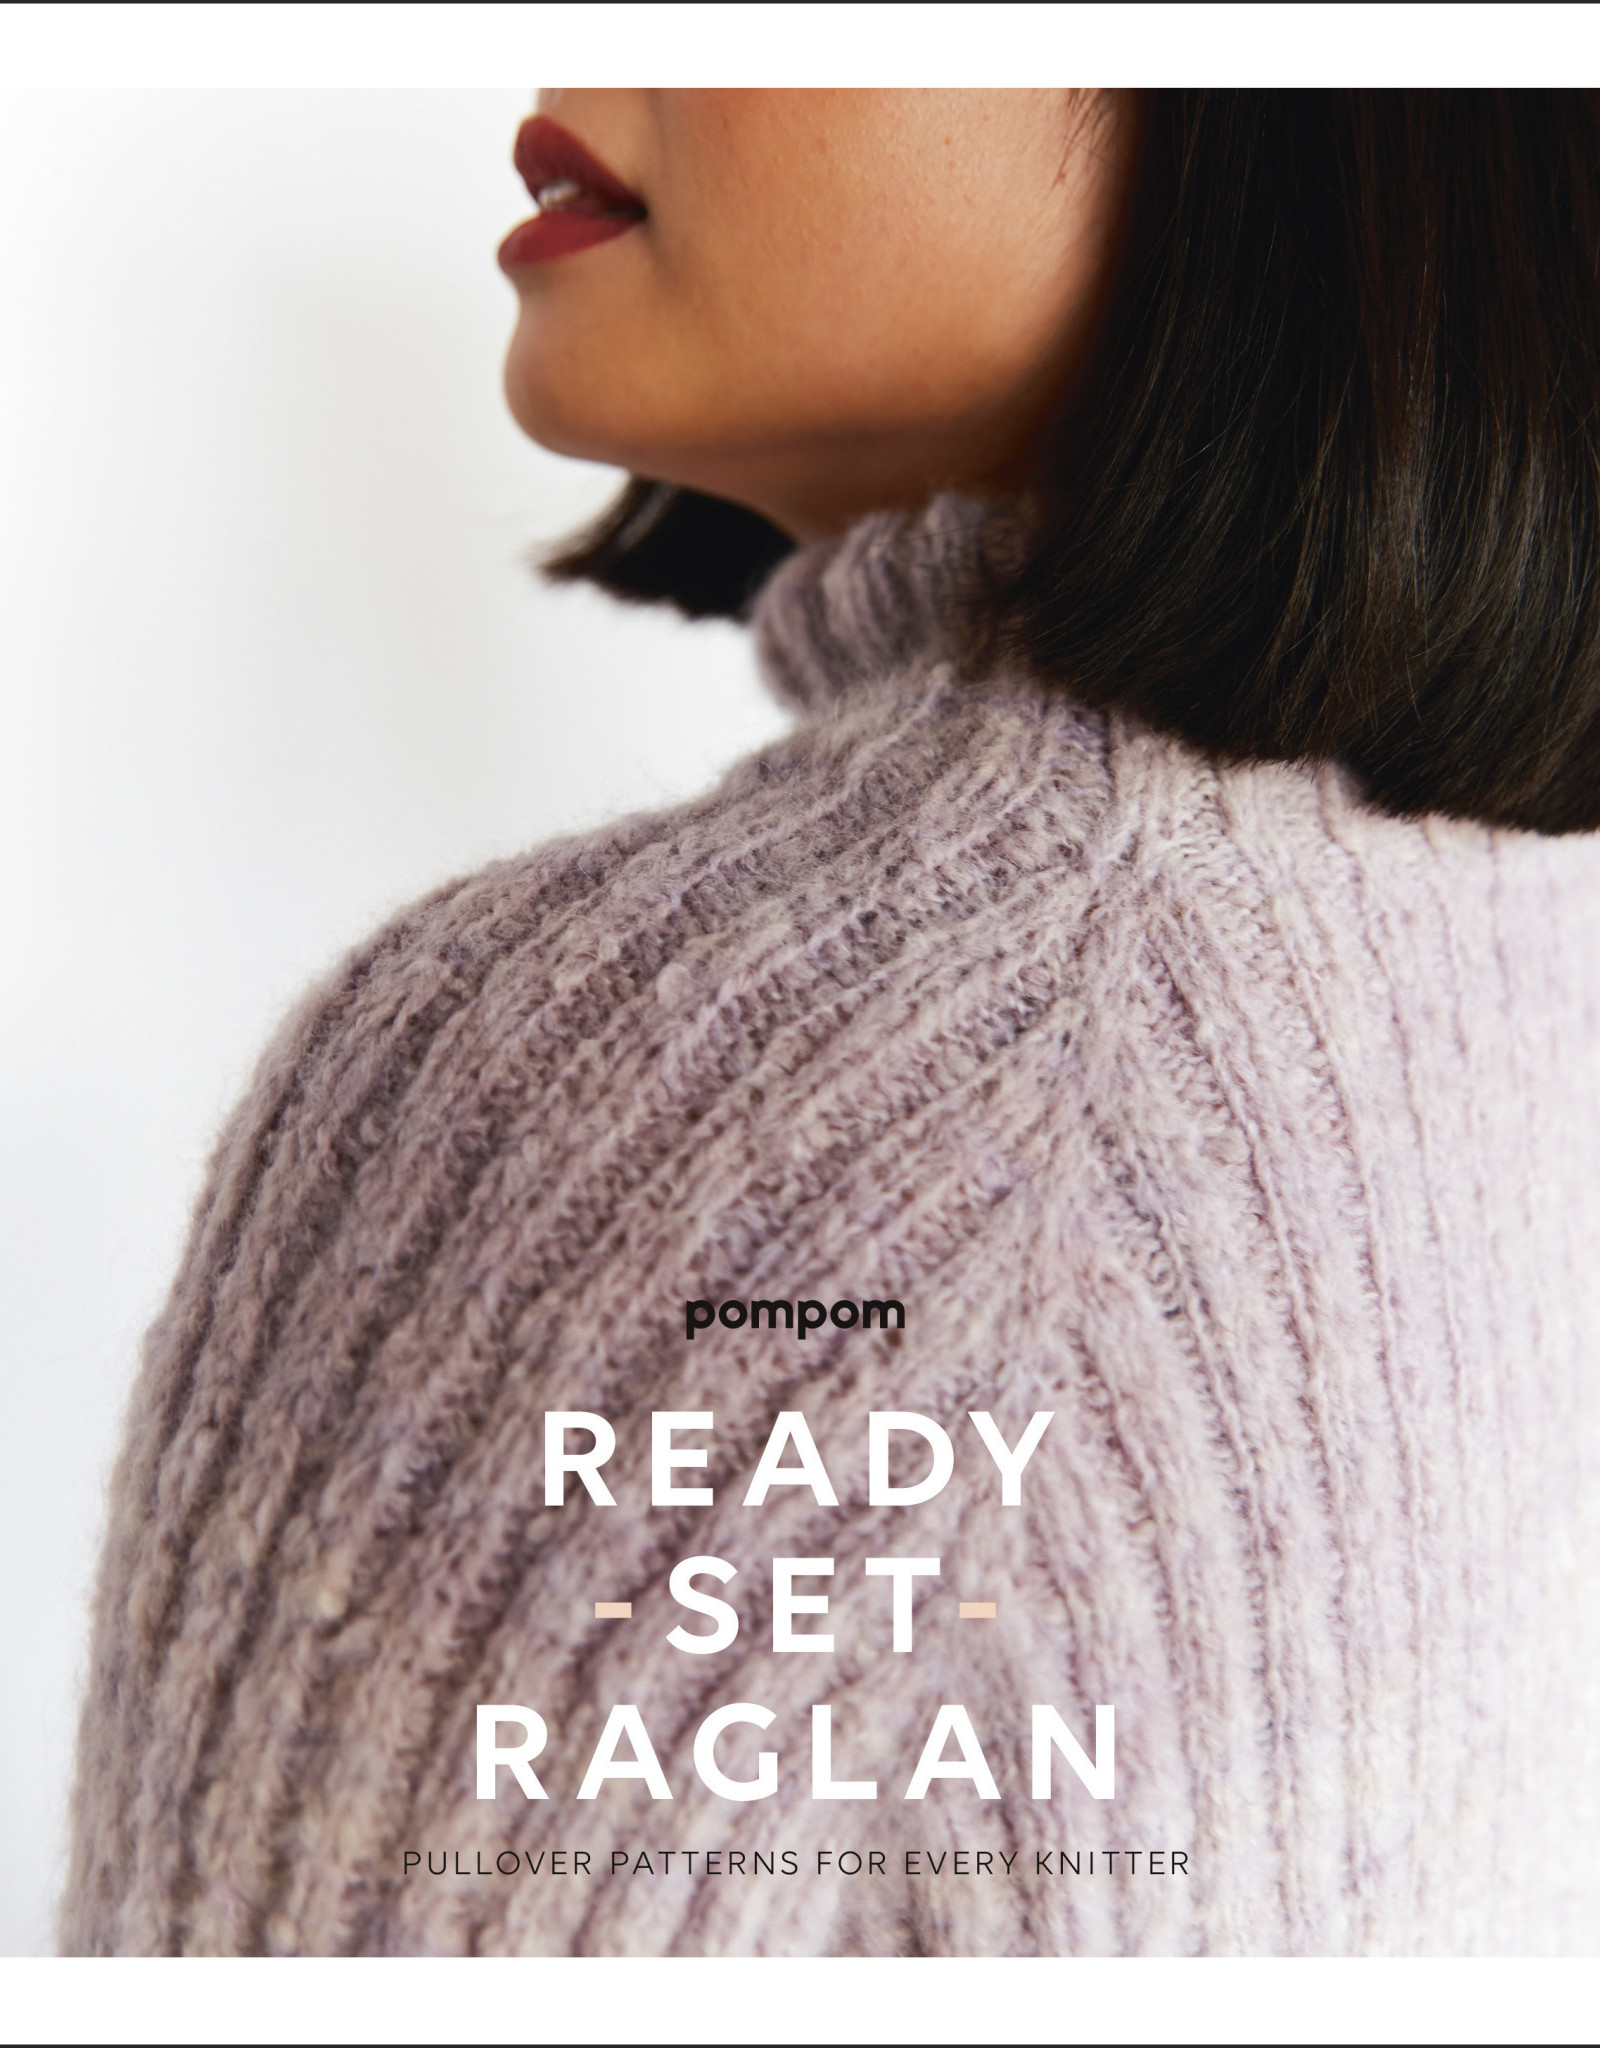 Pom Pom Ready Set Raglan: Pullover Patterns for Every Knitter